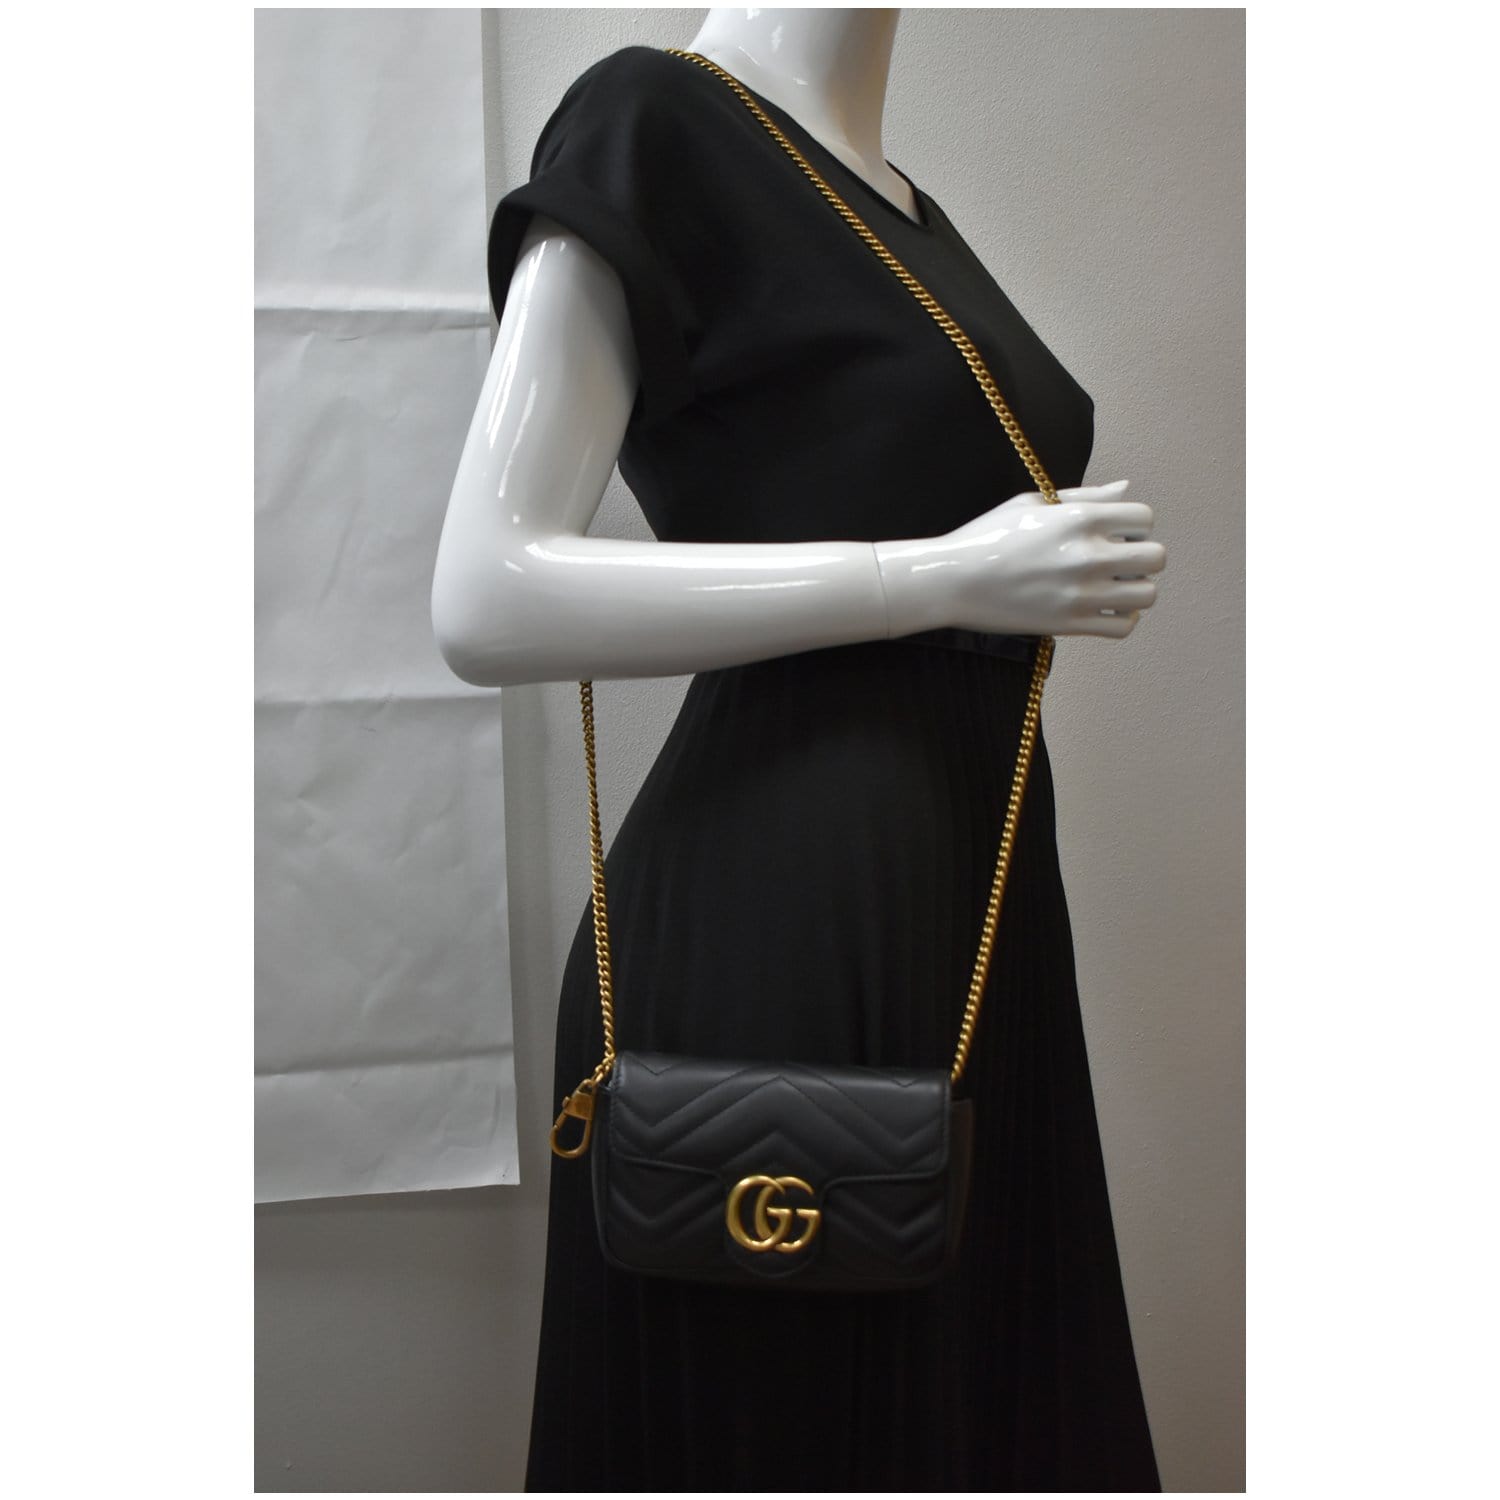 Black Leather GG Marmont Mini Bag